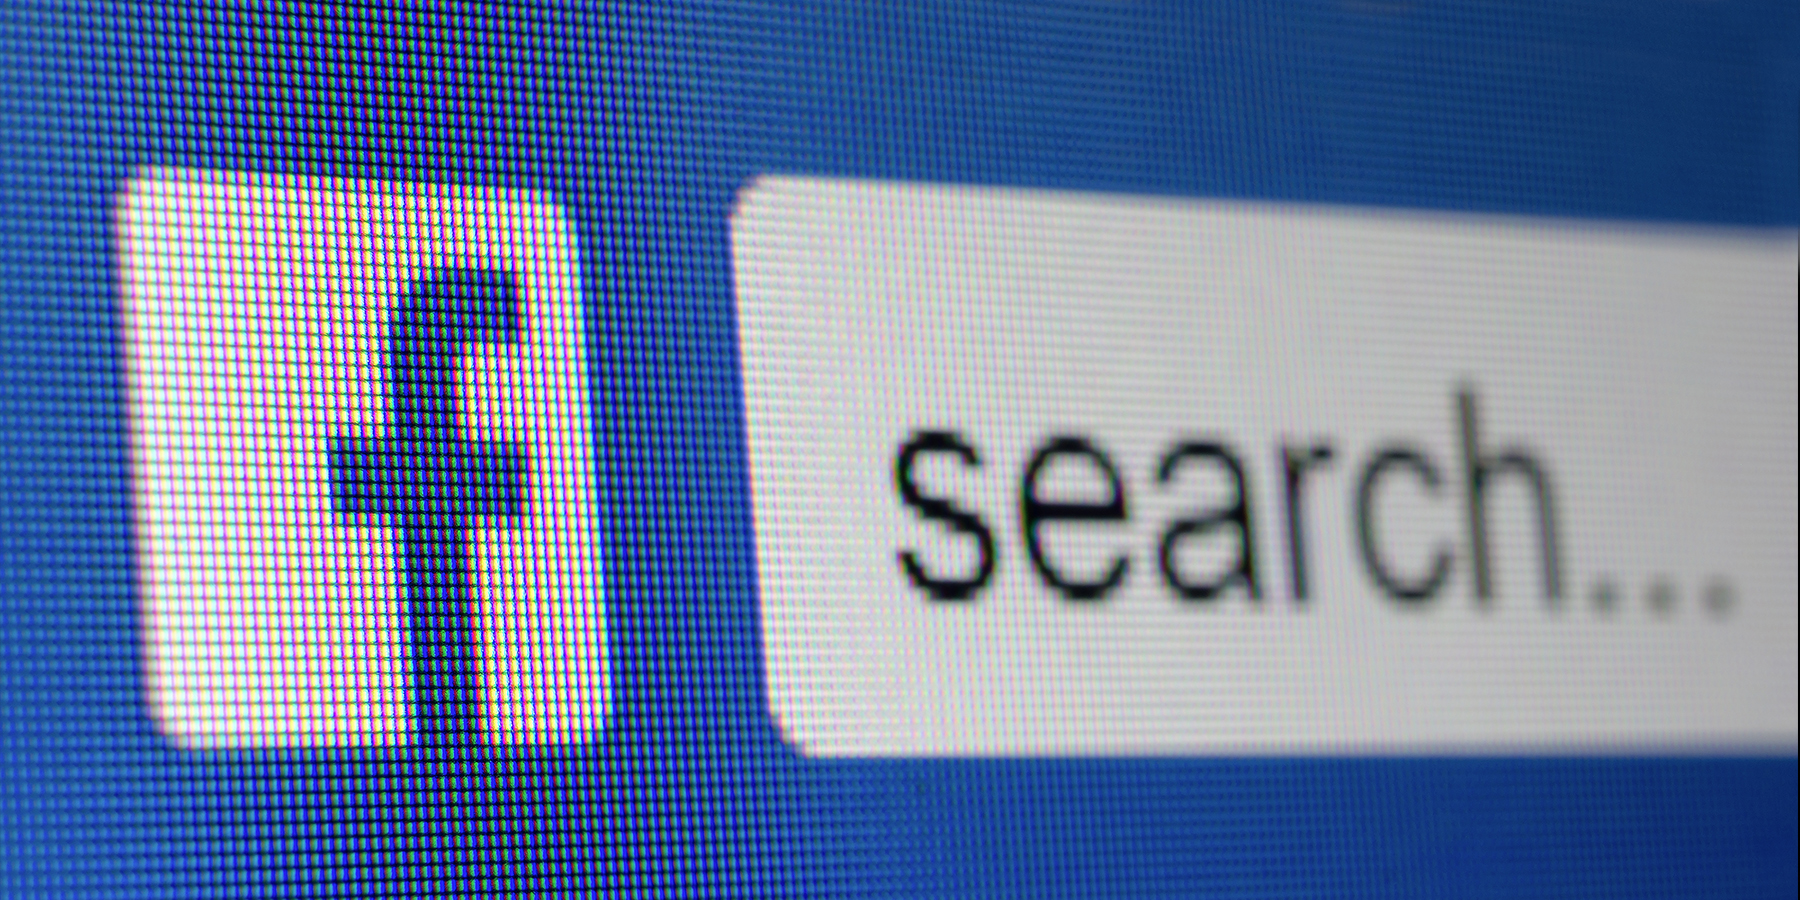 facebook-search